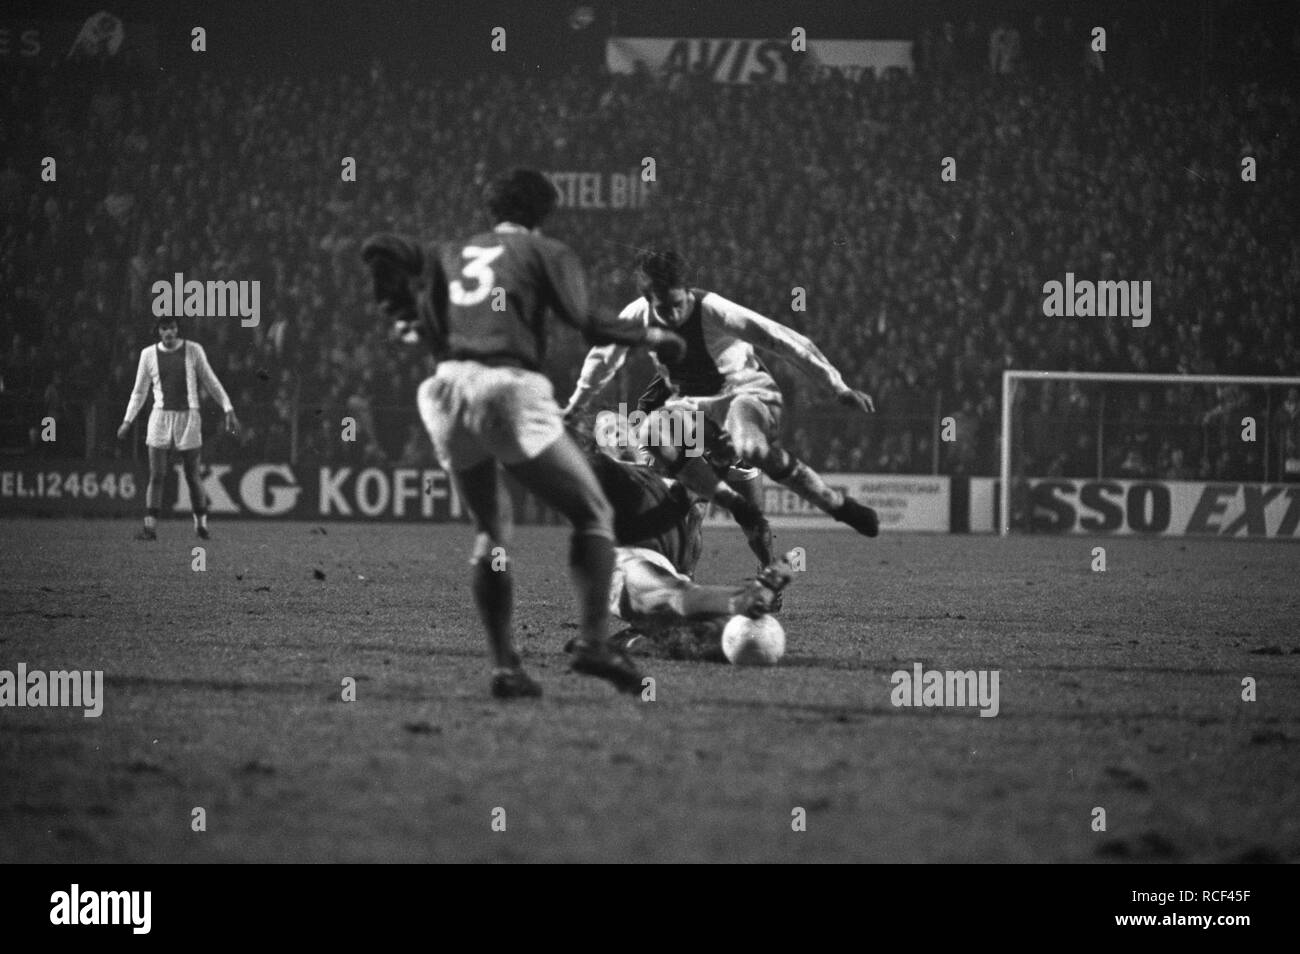 paniek Sherlock Holmes Lieve Ajax tegen Go Ahead Eagles 3-0 om KNVB beker Johan Cruijff (rechts) in  actie, Bestanddeelnr 925-3966 Stock Photo - Alamy